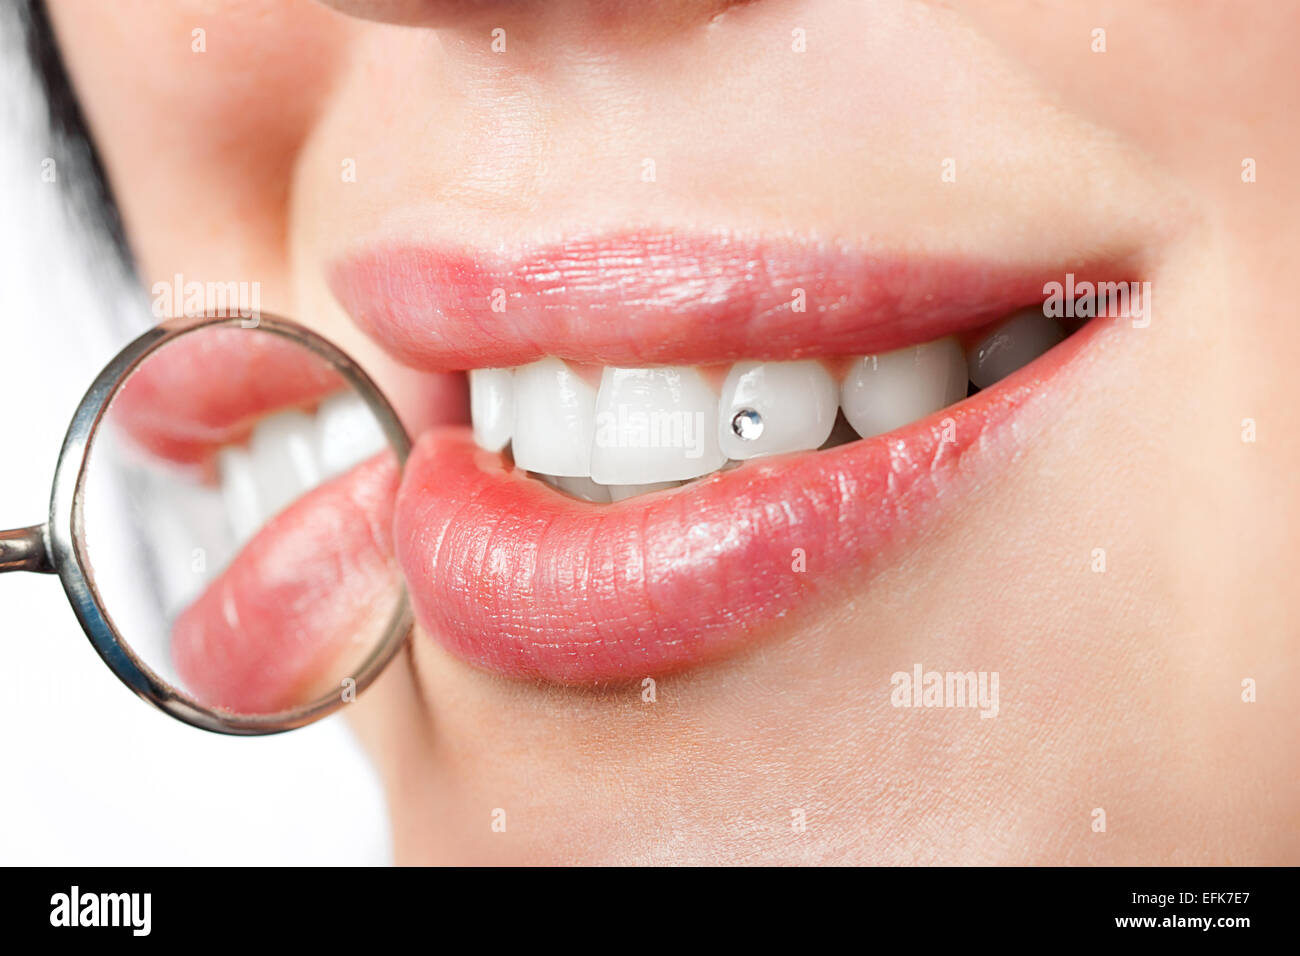 dental mouth mirror near healthy white woman teeth with precious stone on it Stock Photo